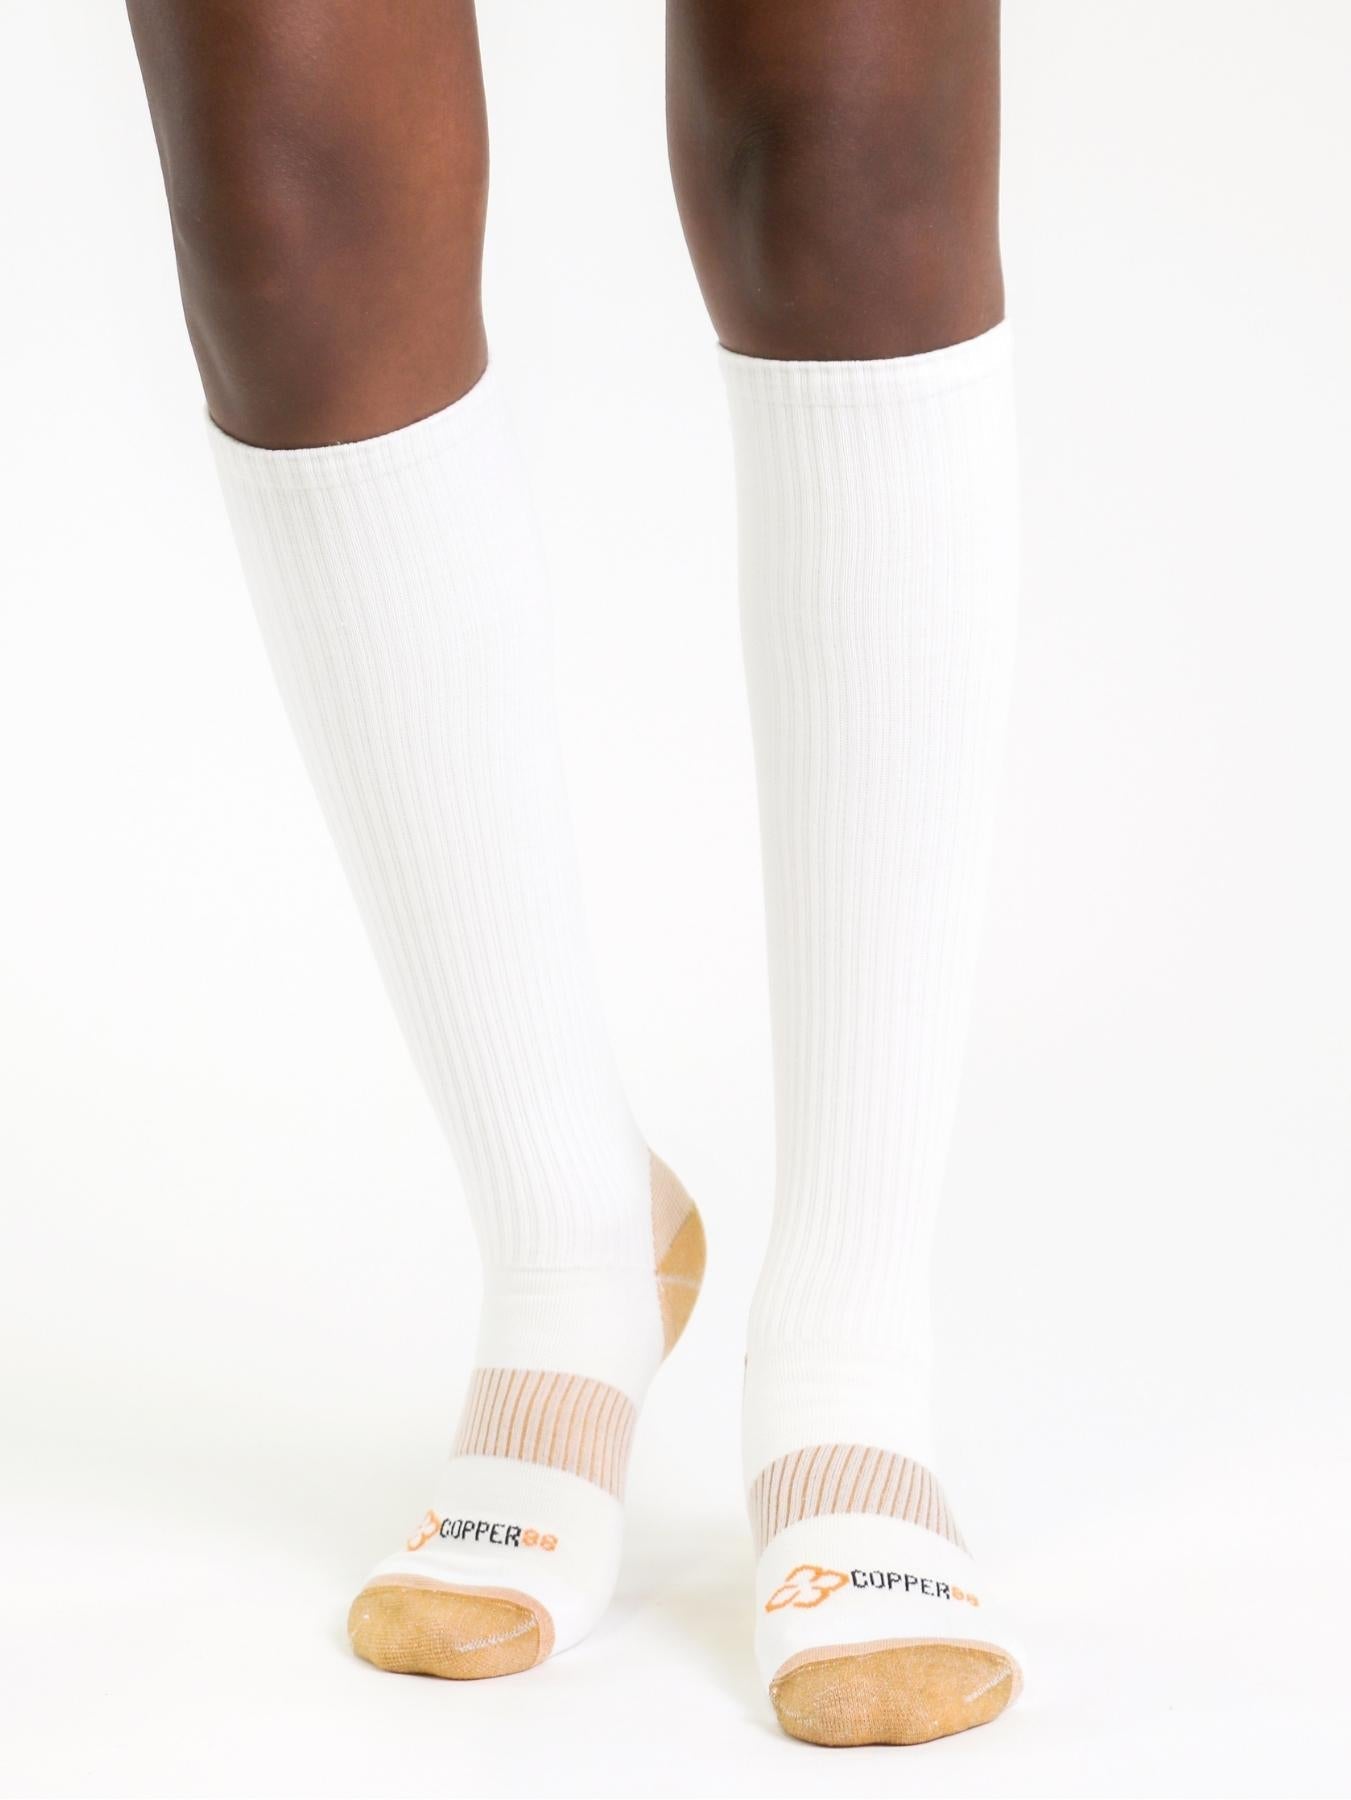 Copper Compression Knee Socks (White) - Ladies